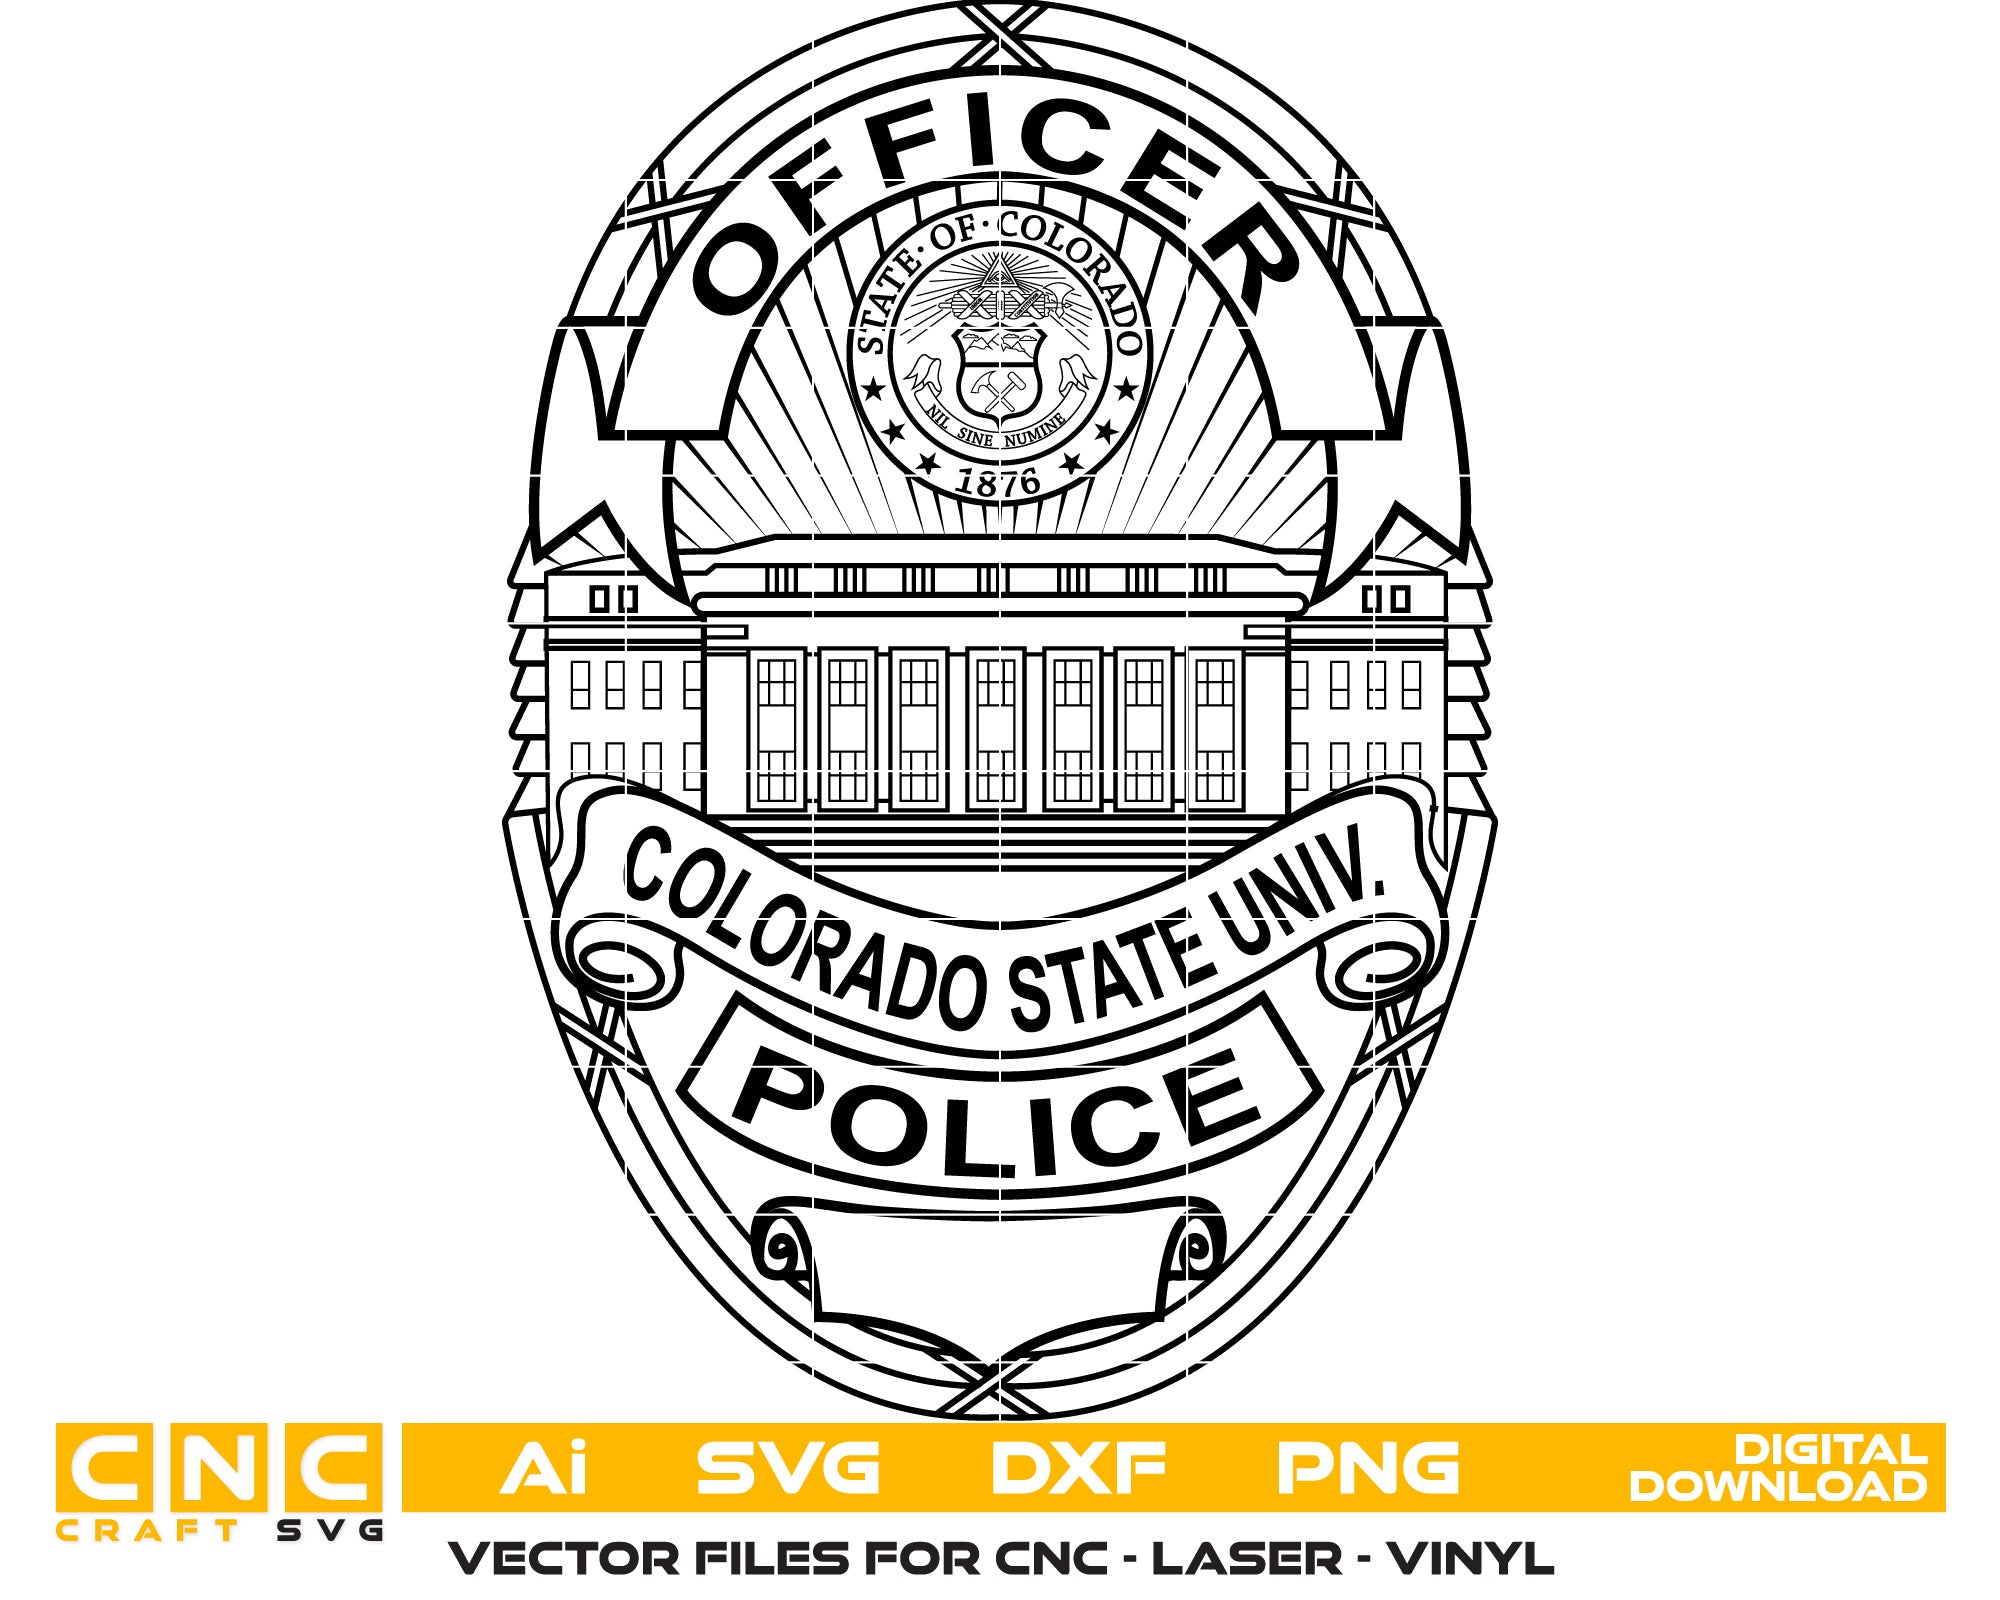 Colorado State Univ Police Officer Badge Vector Art, Ai,SVG, DXF, PNG, Digital Files